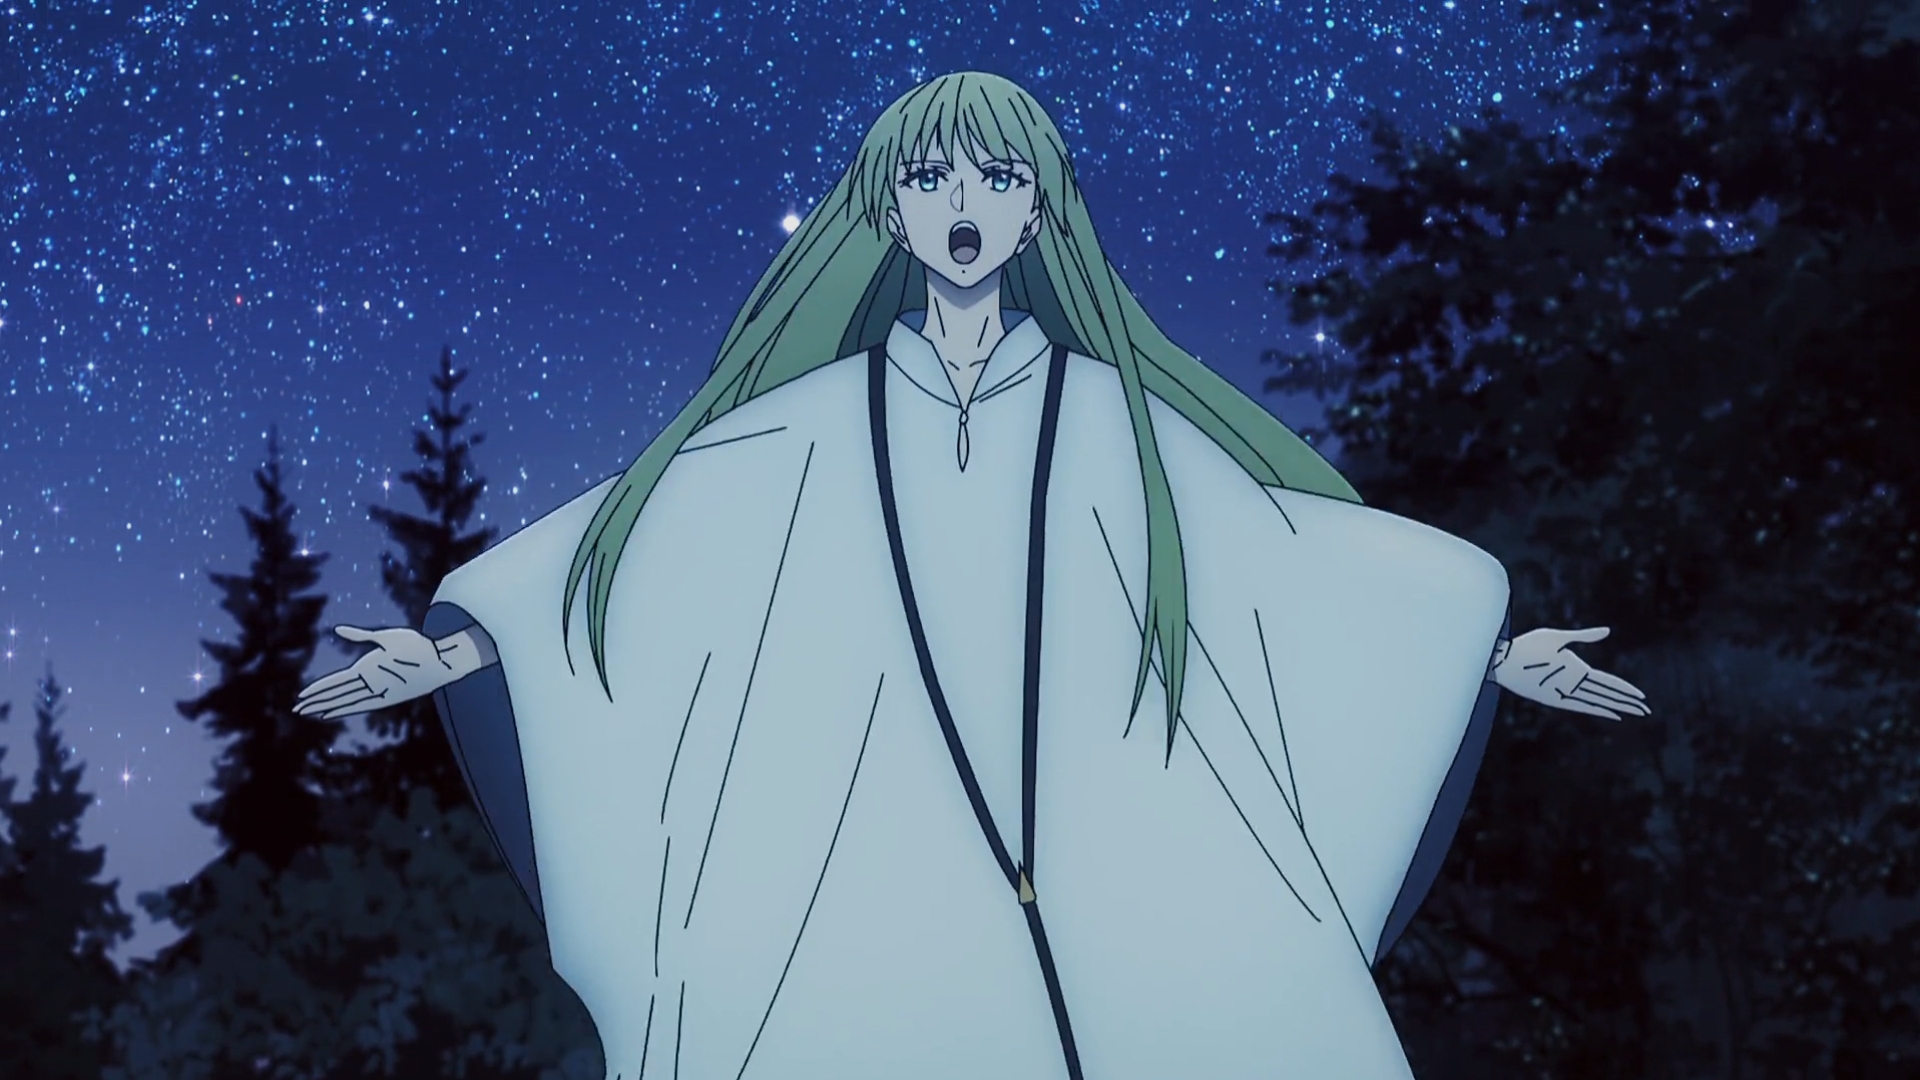 Anime 1920x1080 Fate series Fate strange Fake Enkidu (FGO) long hair standing sky stars trees night open mouth gender-fluid